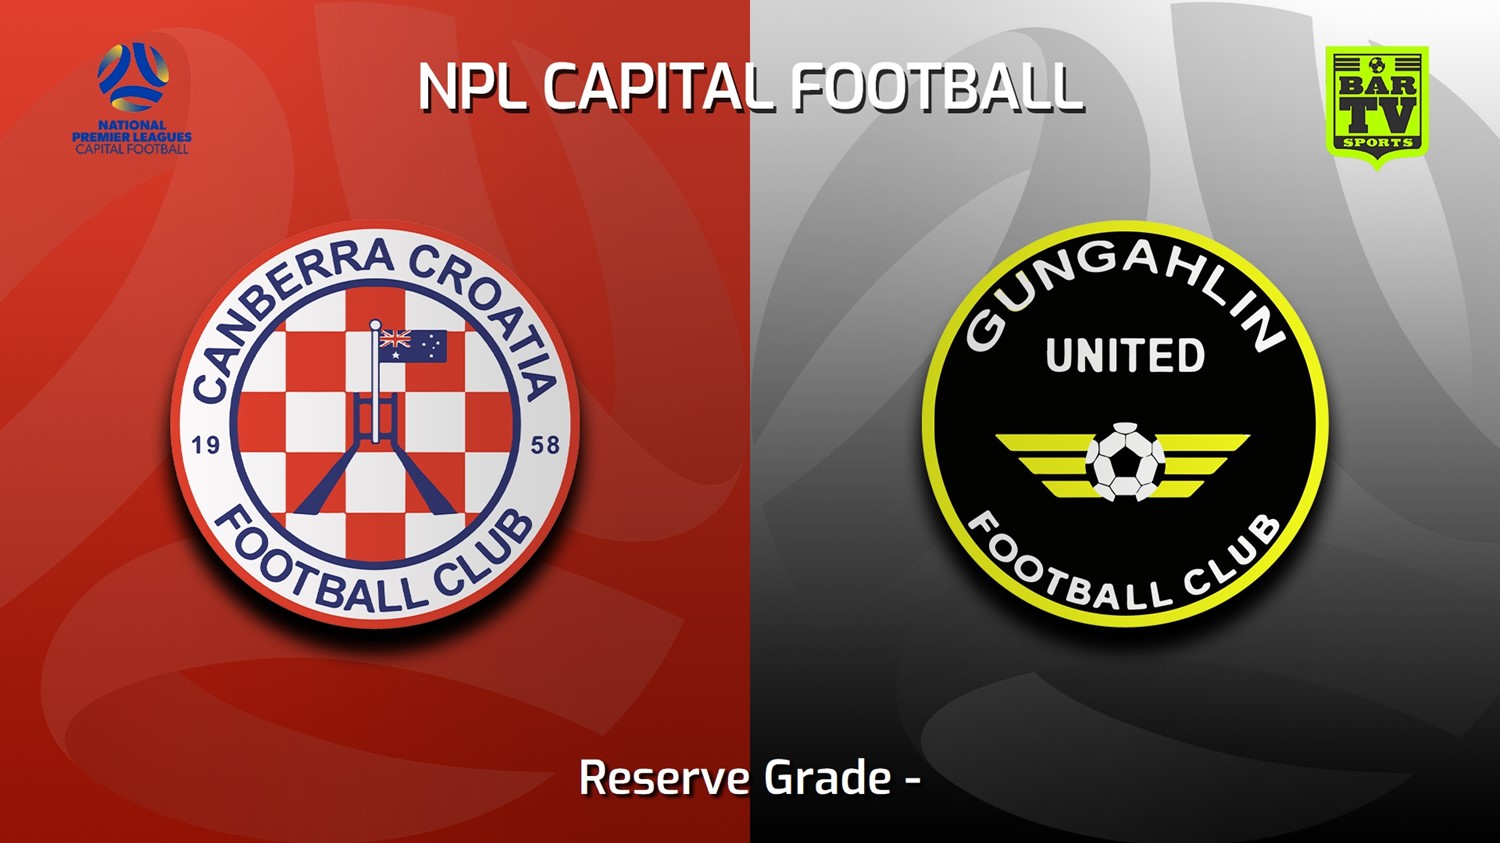 230820-NPL Women - Reserve Grade - Capital Football Round 19 - Canberra Croatia FC (women) v Gungahlin United FC (women) Slate Image